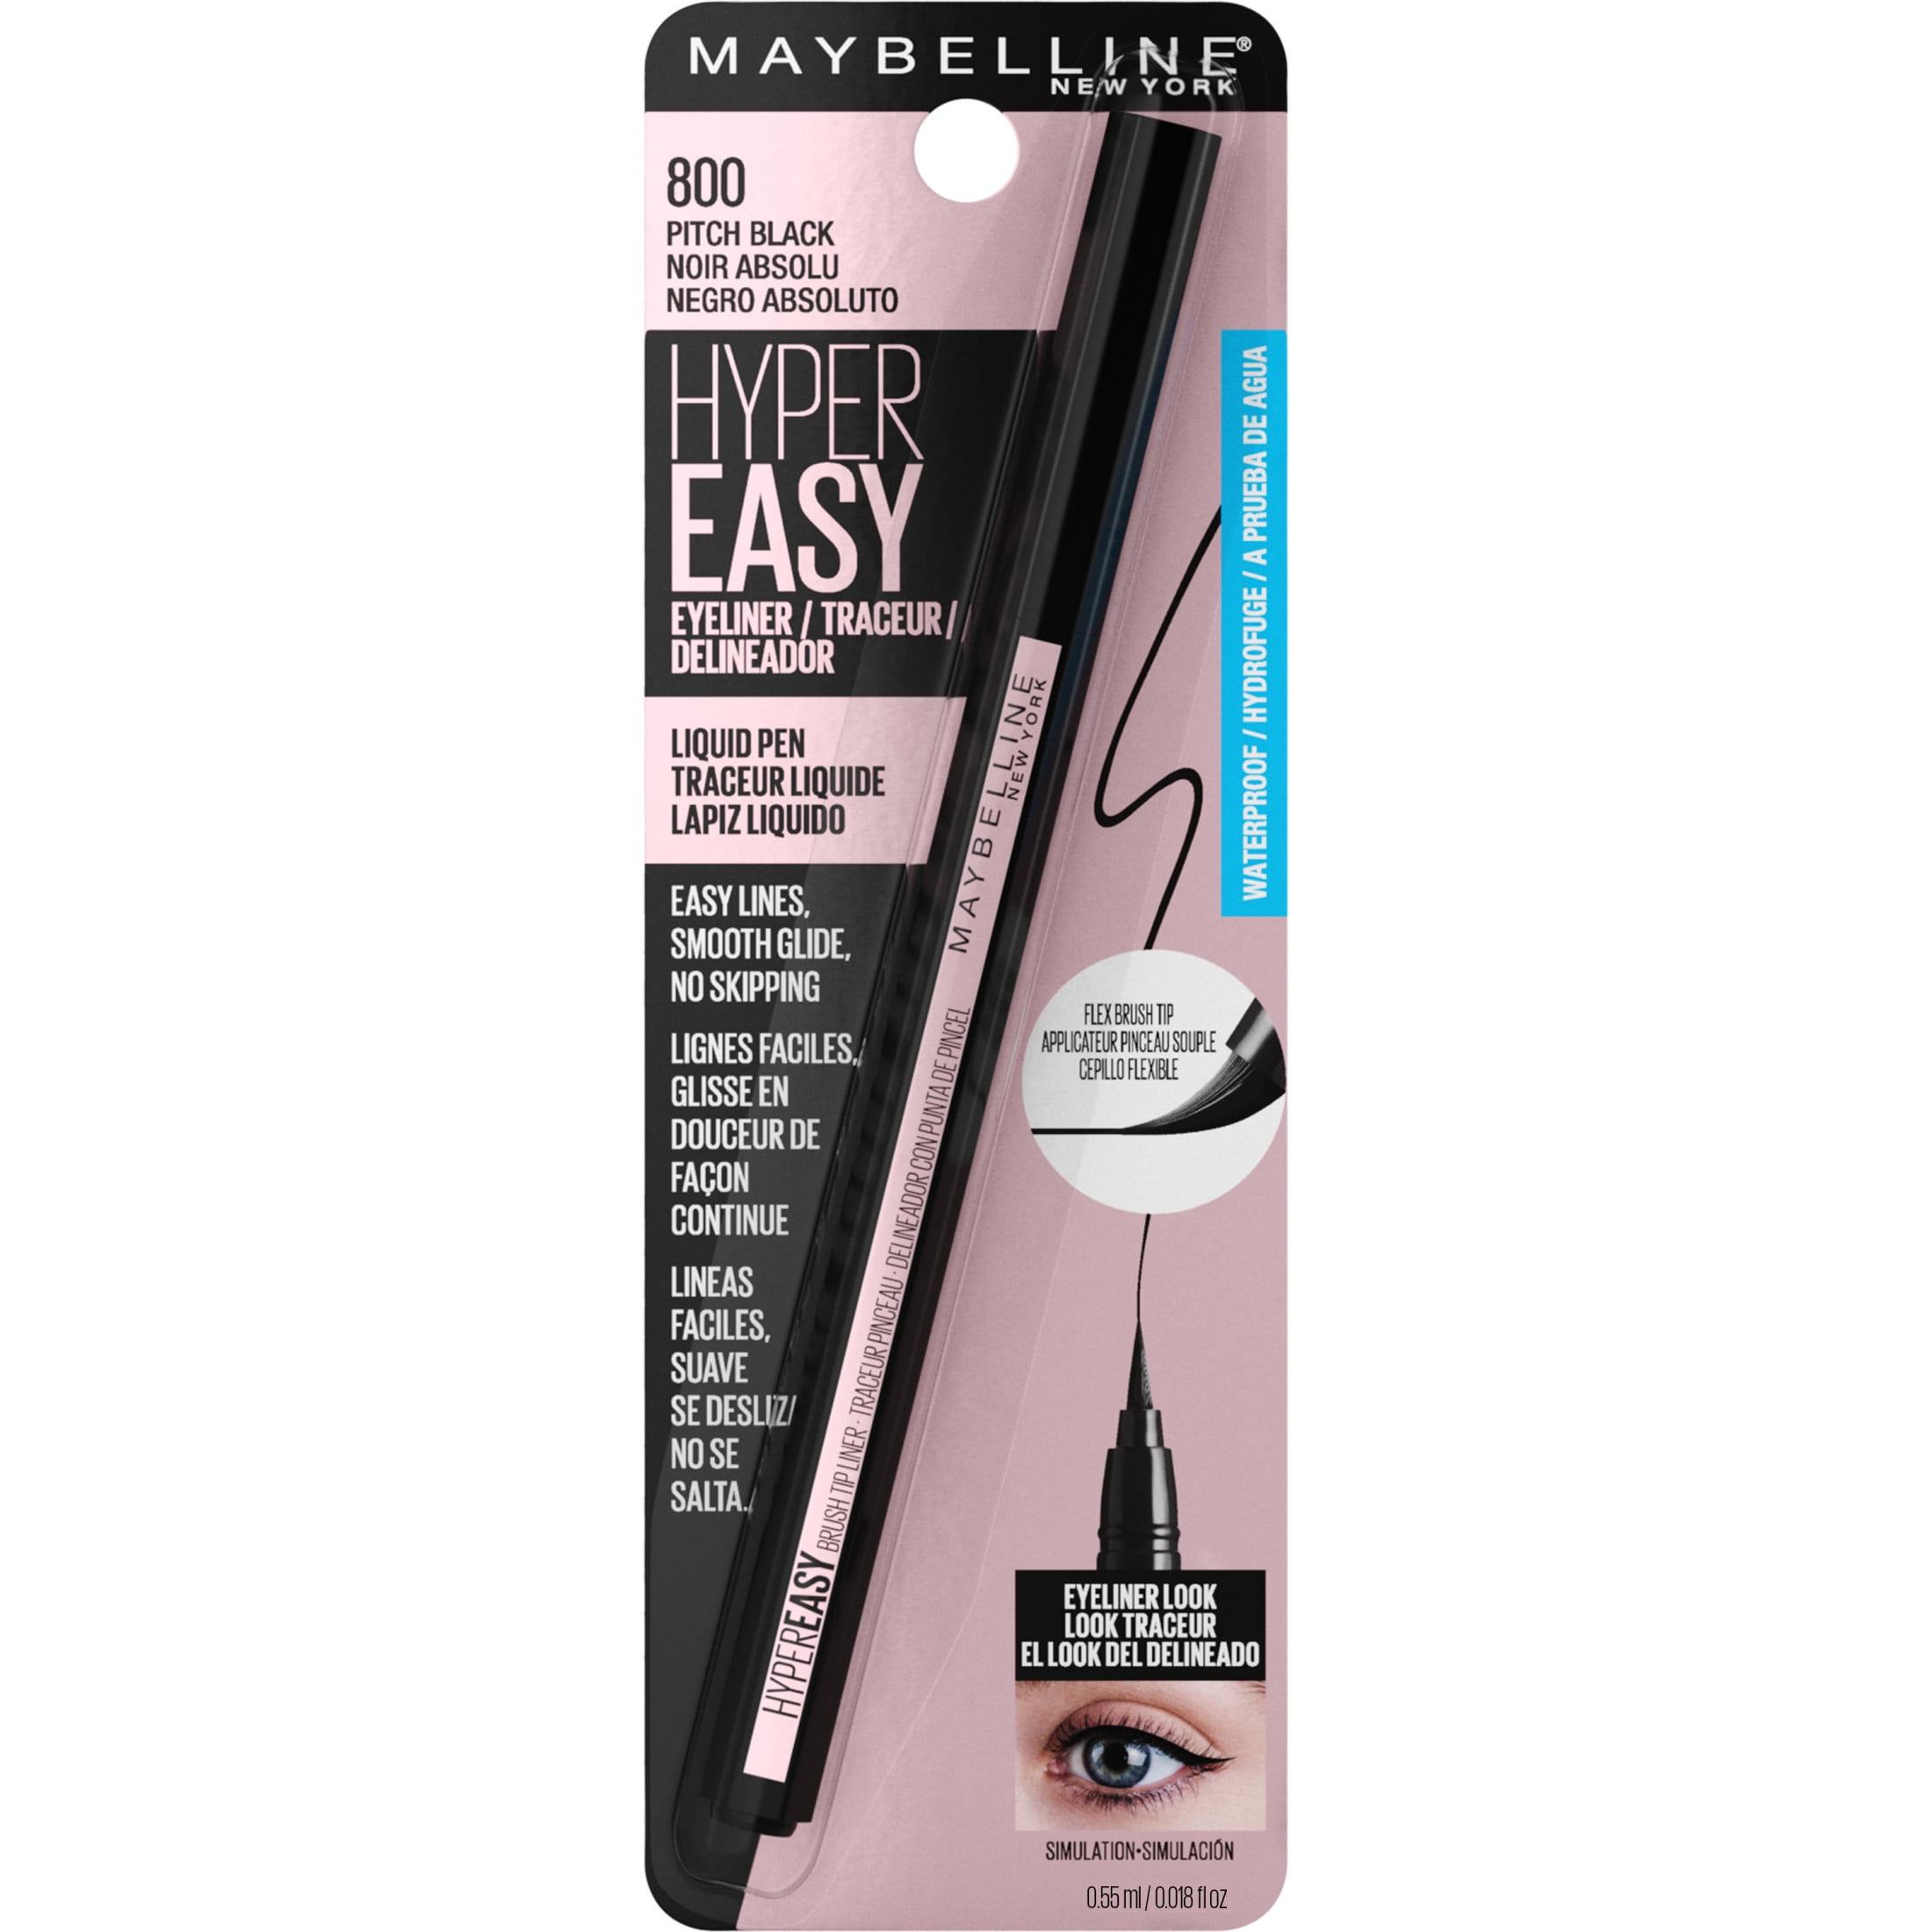  Maybelline Lash Sensational Sky High Washable Mascara + Hyper  Easy Liquid Eyeliner Makeup Bundle, Includes 1 Mascara in Blackest Black  and 1 Eyeliner in Pitch Black : Beauty & Personal Care